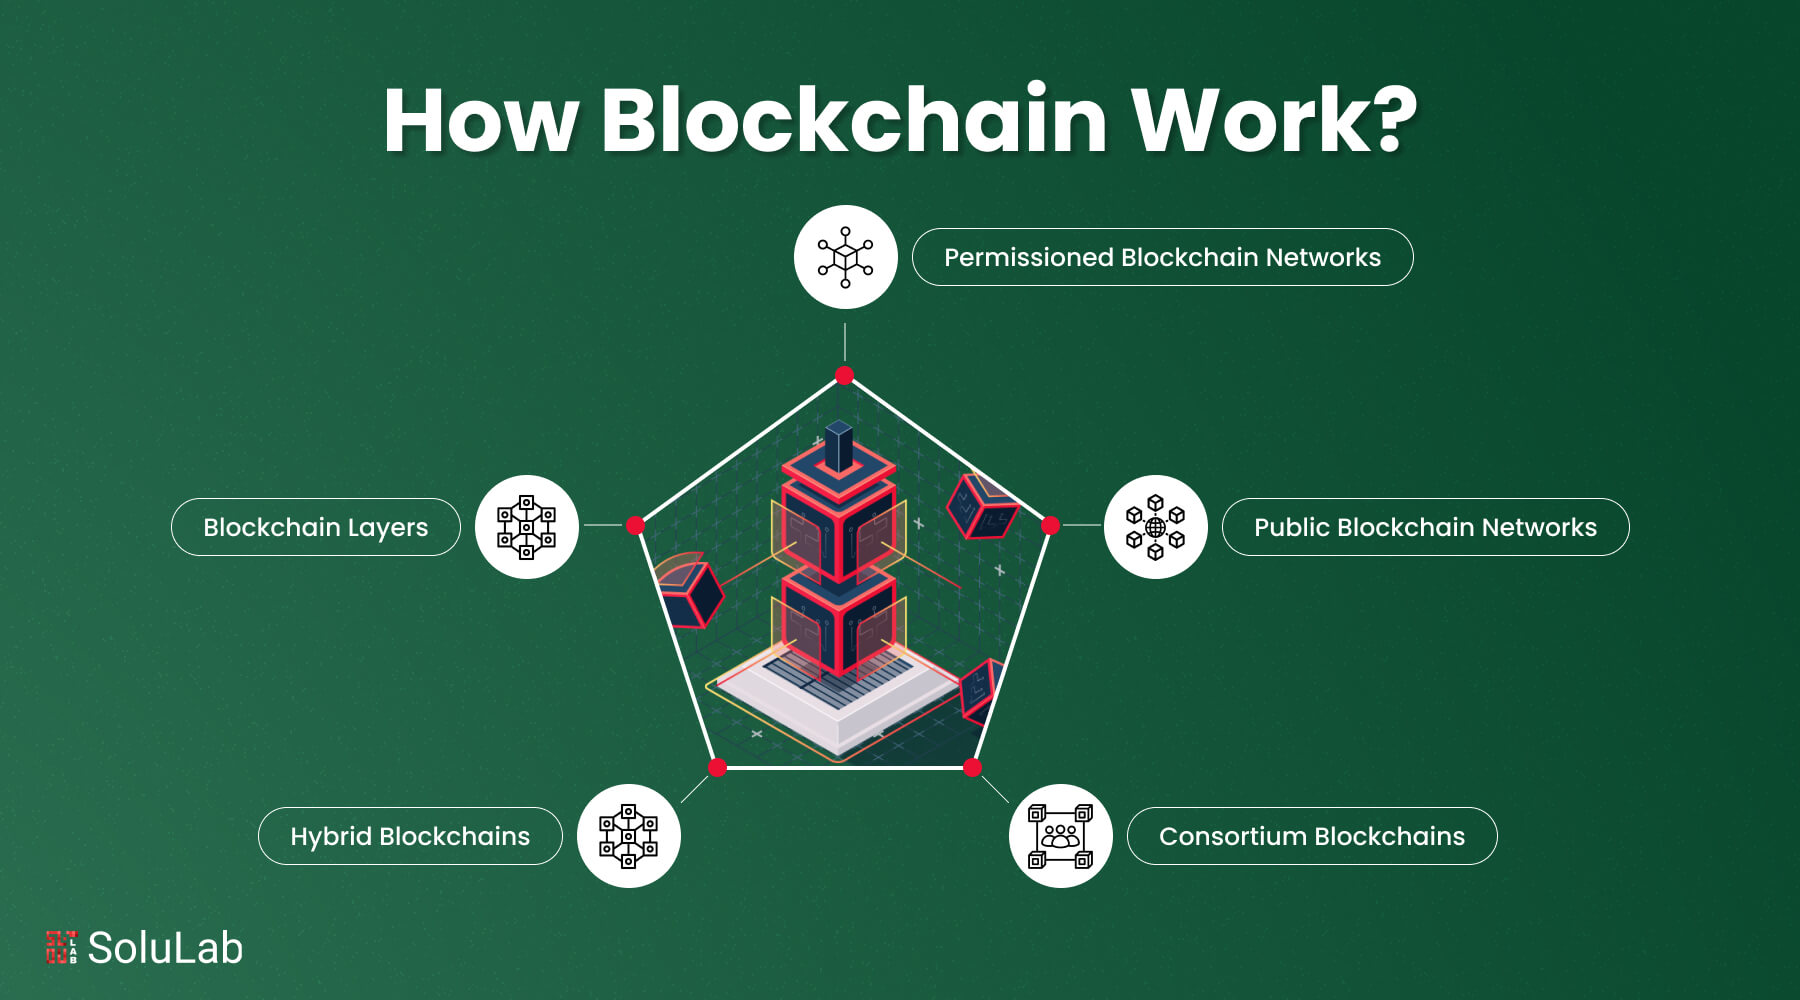 How does Blockchain Work